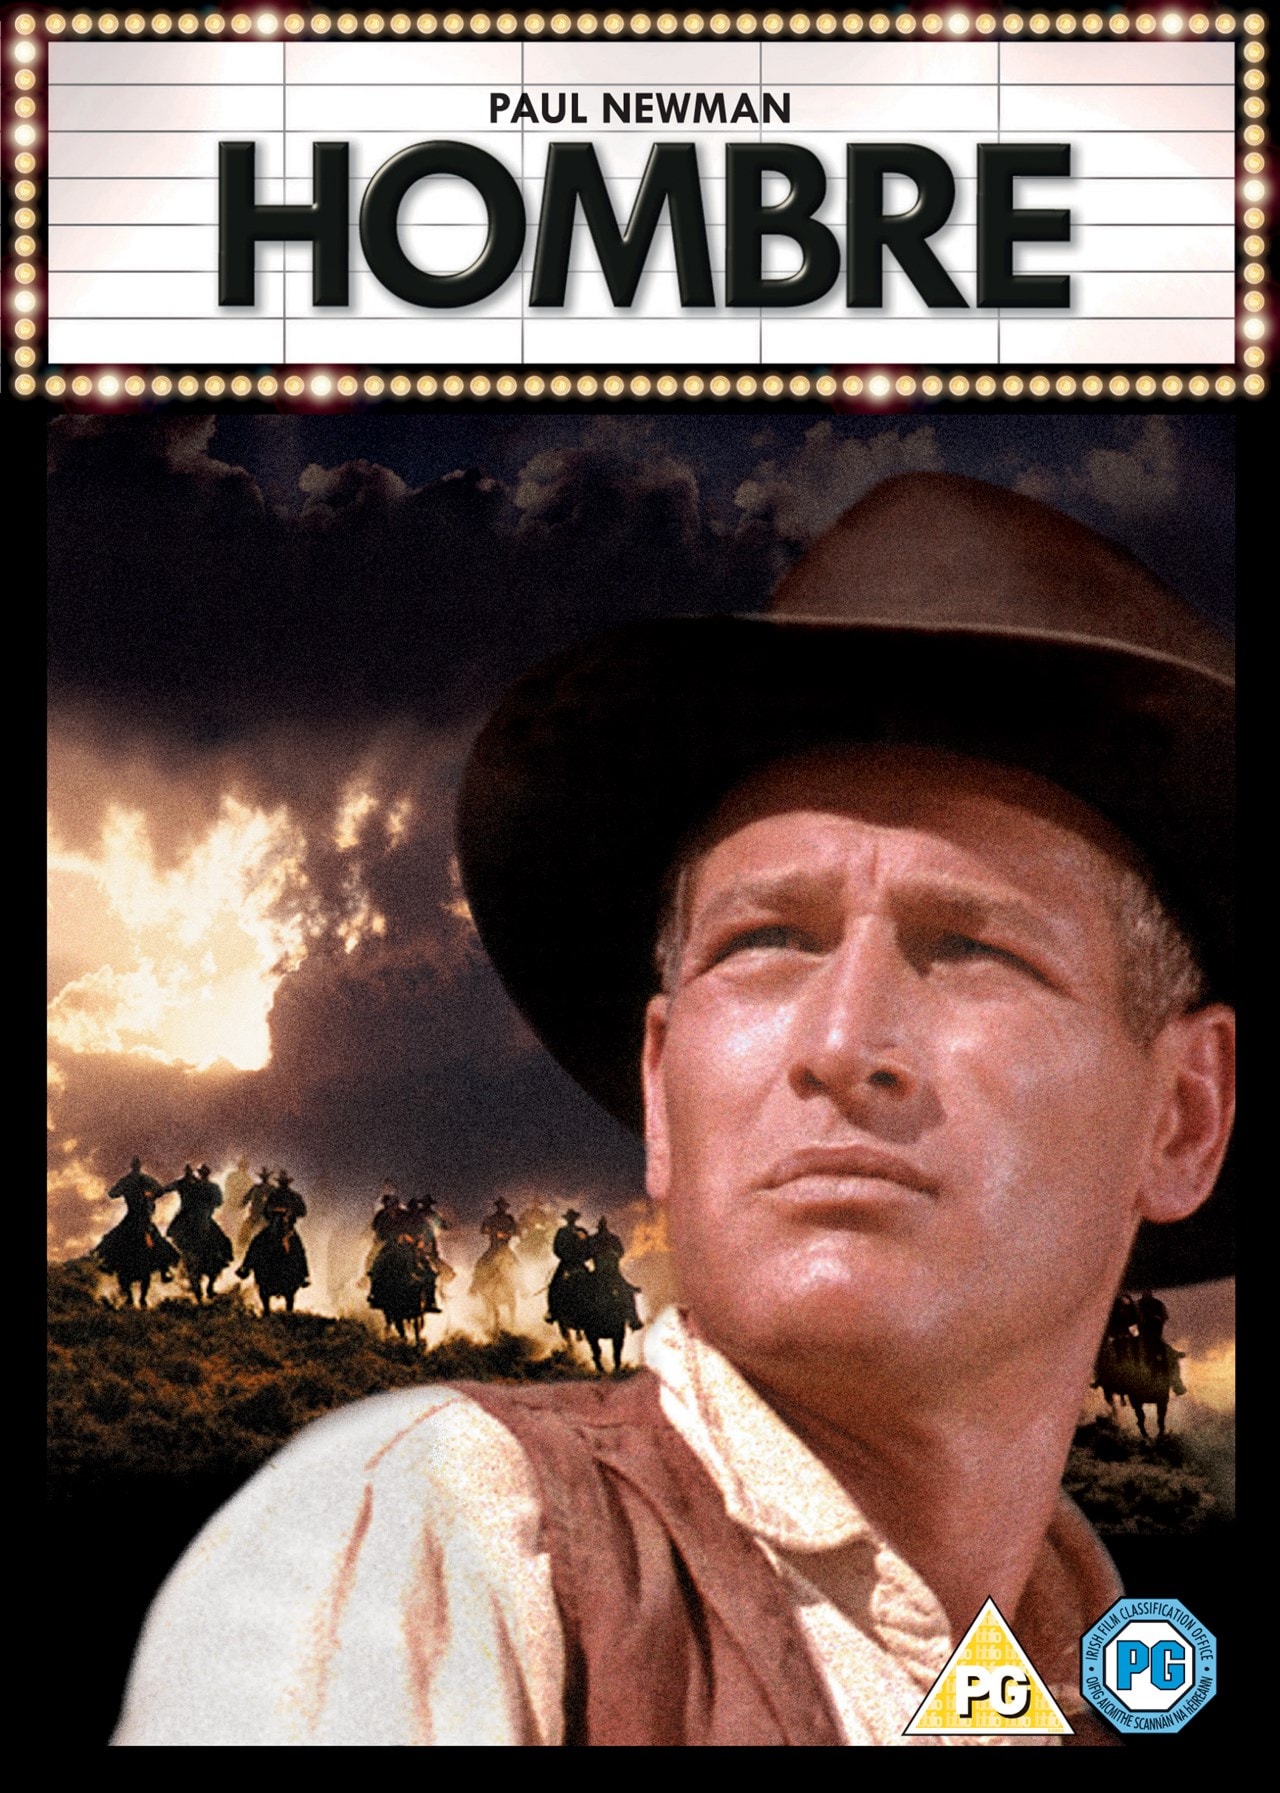 Hombre | DVD | Free shipping over £20 | HMV Store